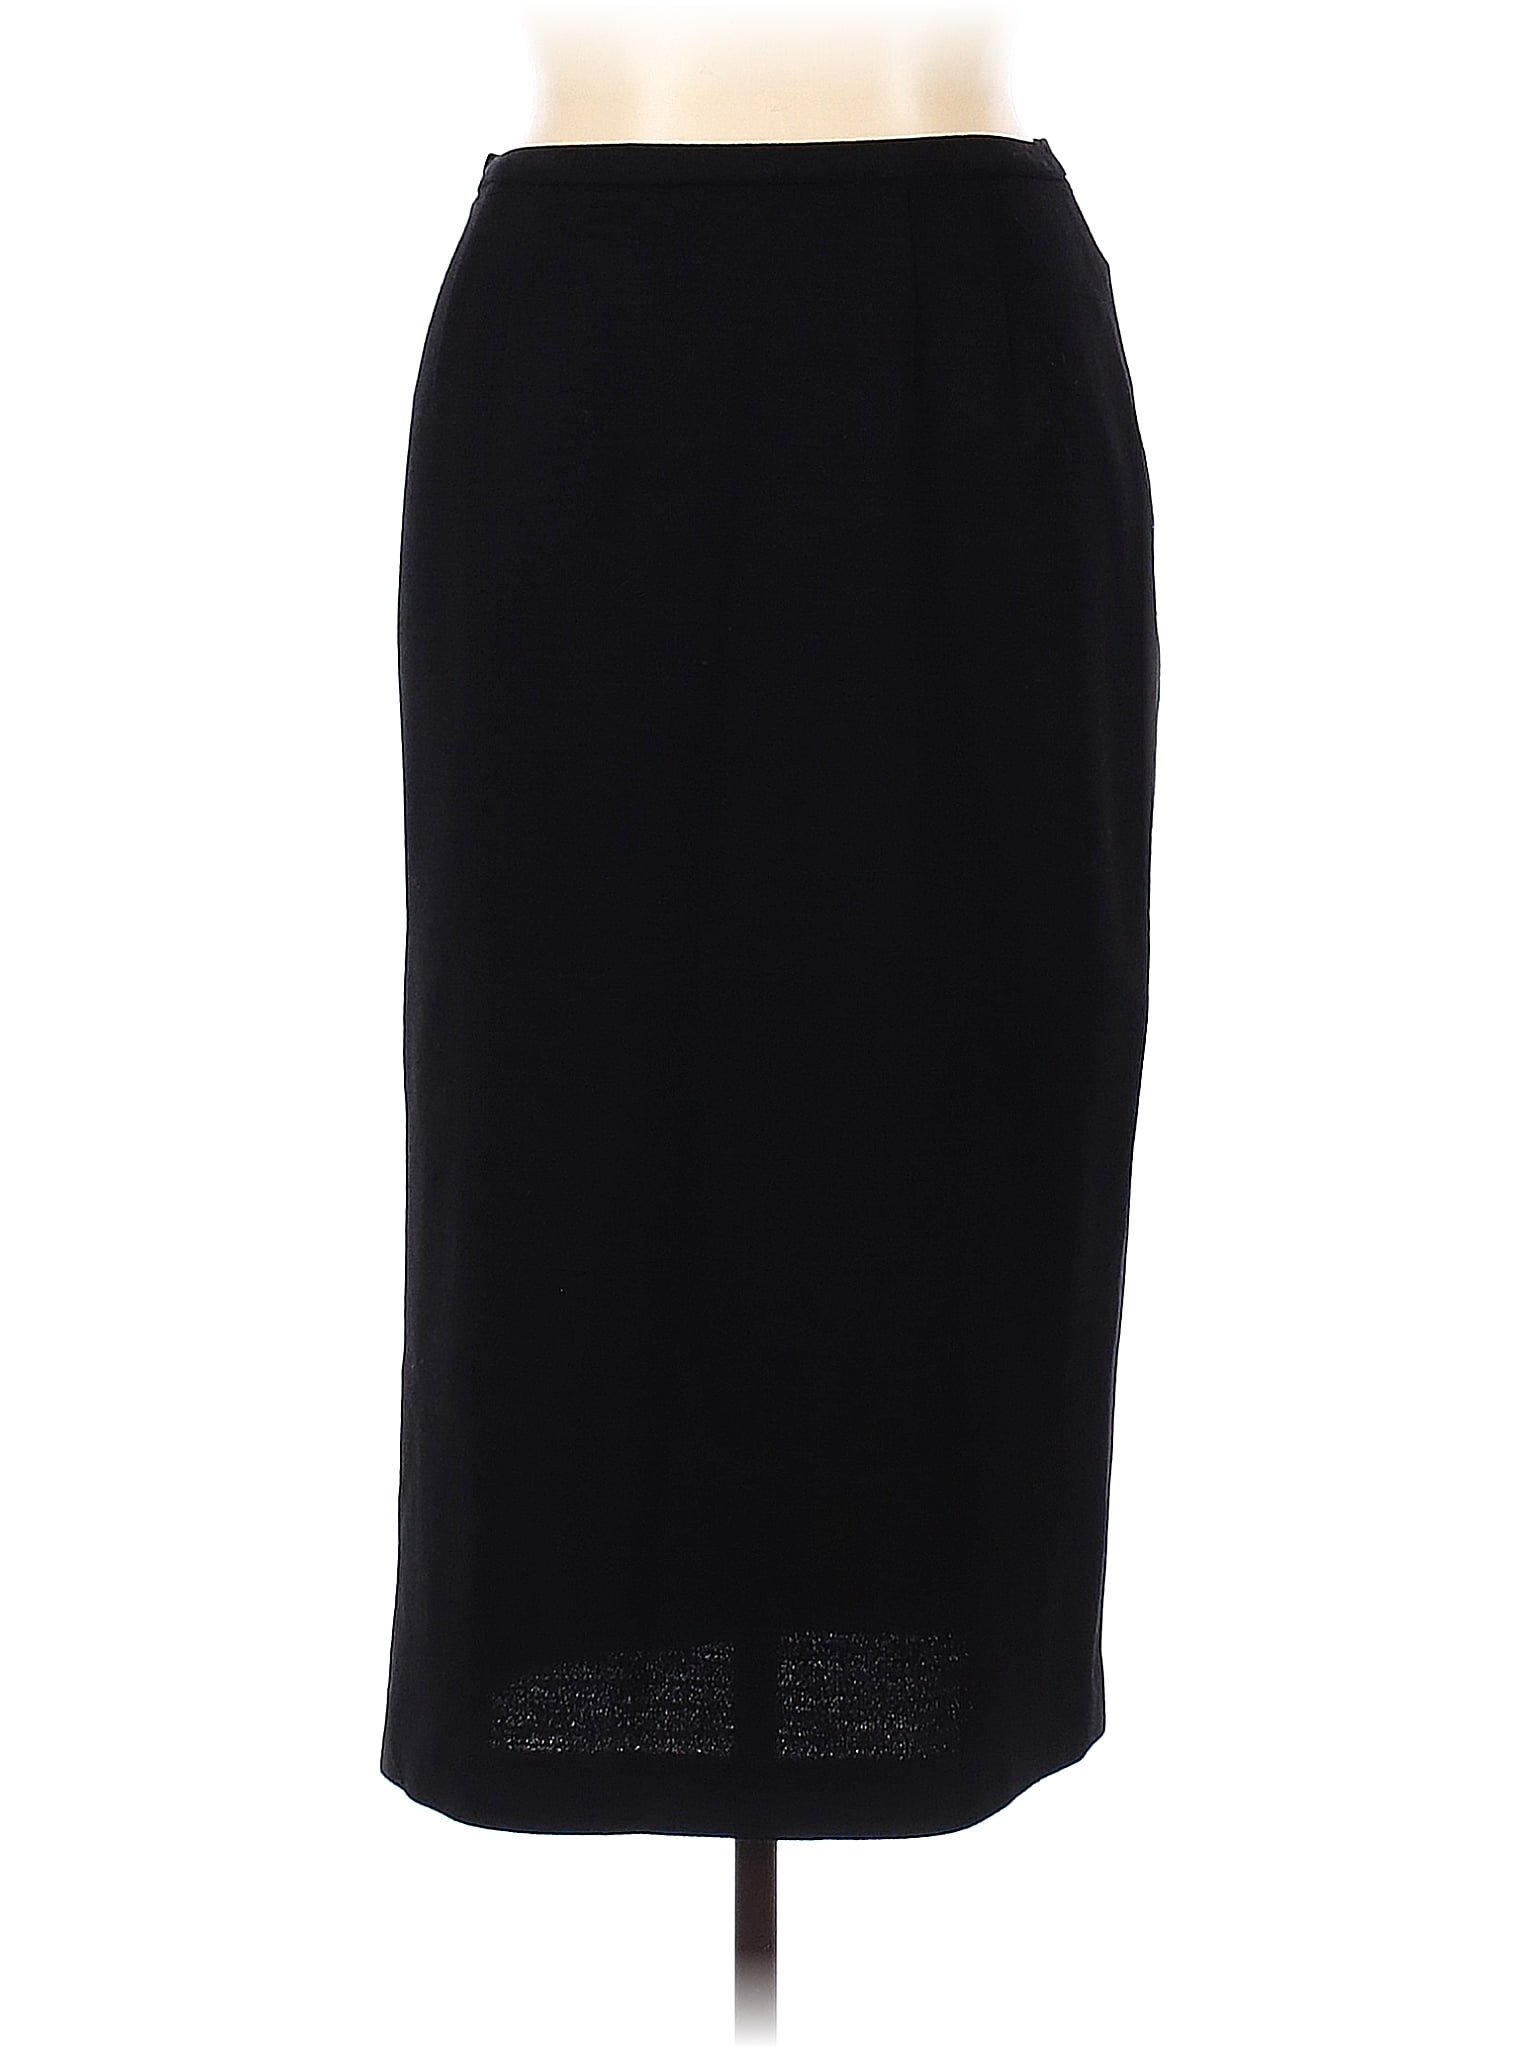 Talbots Black Casual Skirt Size 16 (Petite) - 77% off | thredUP